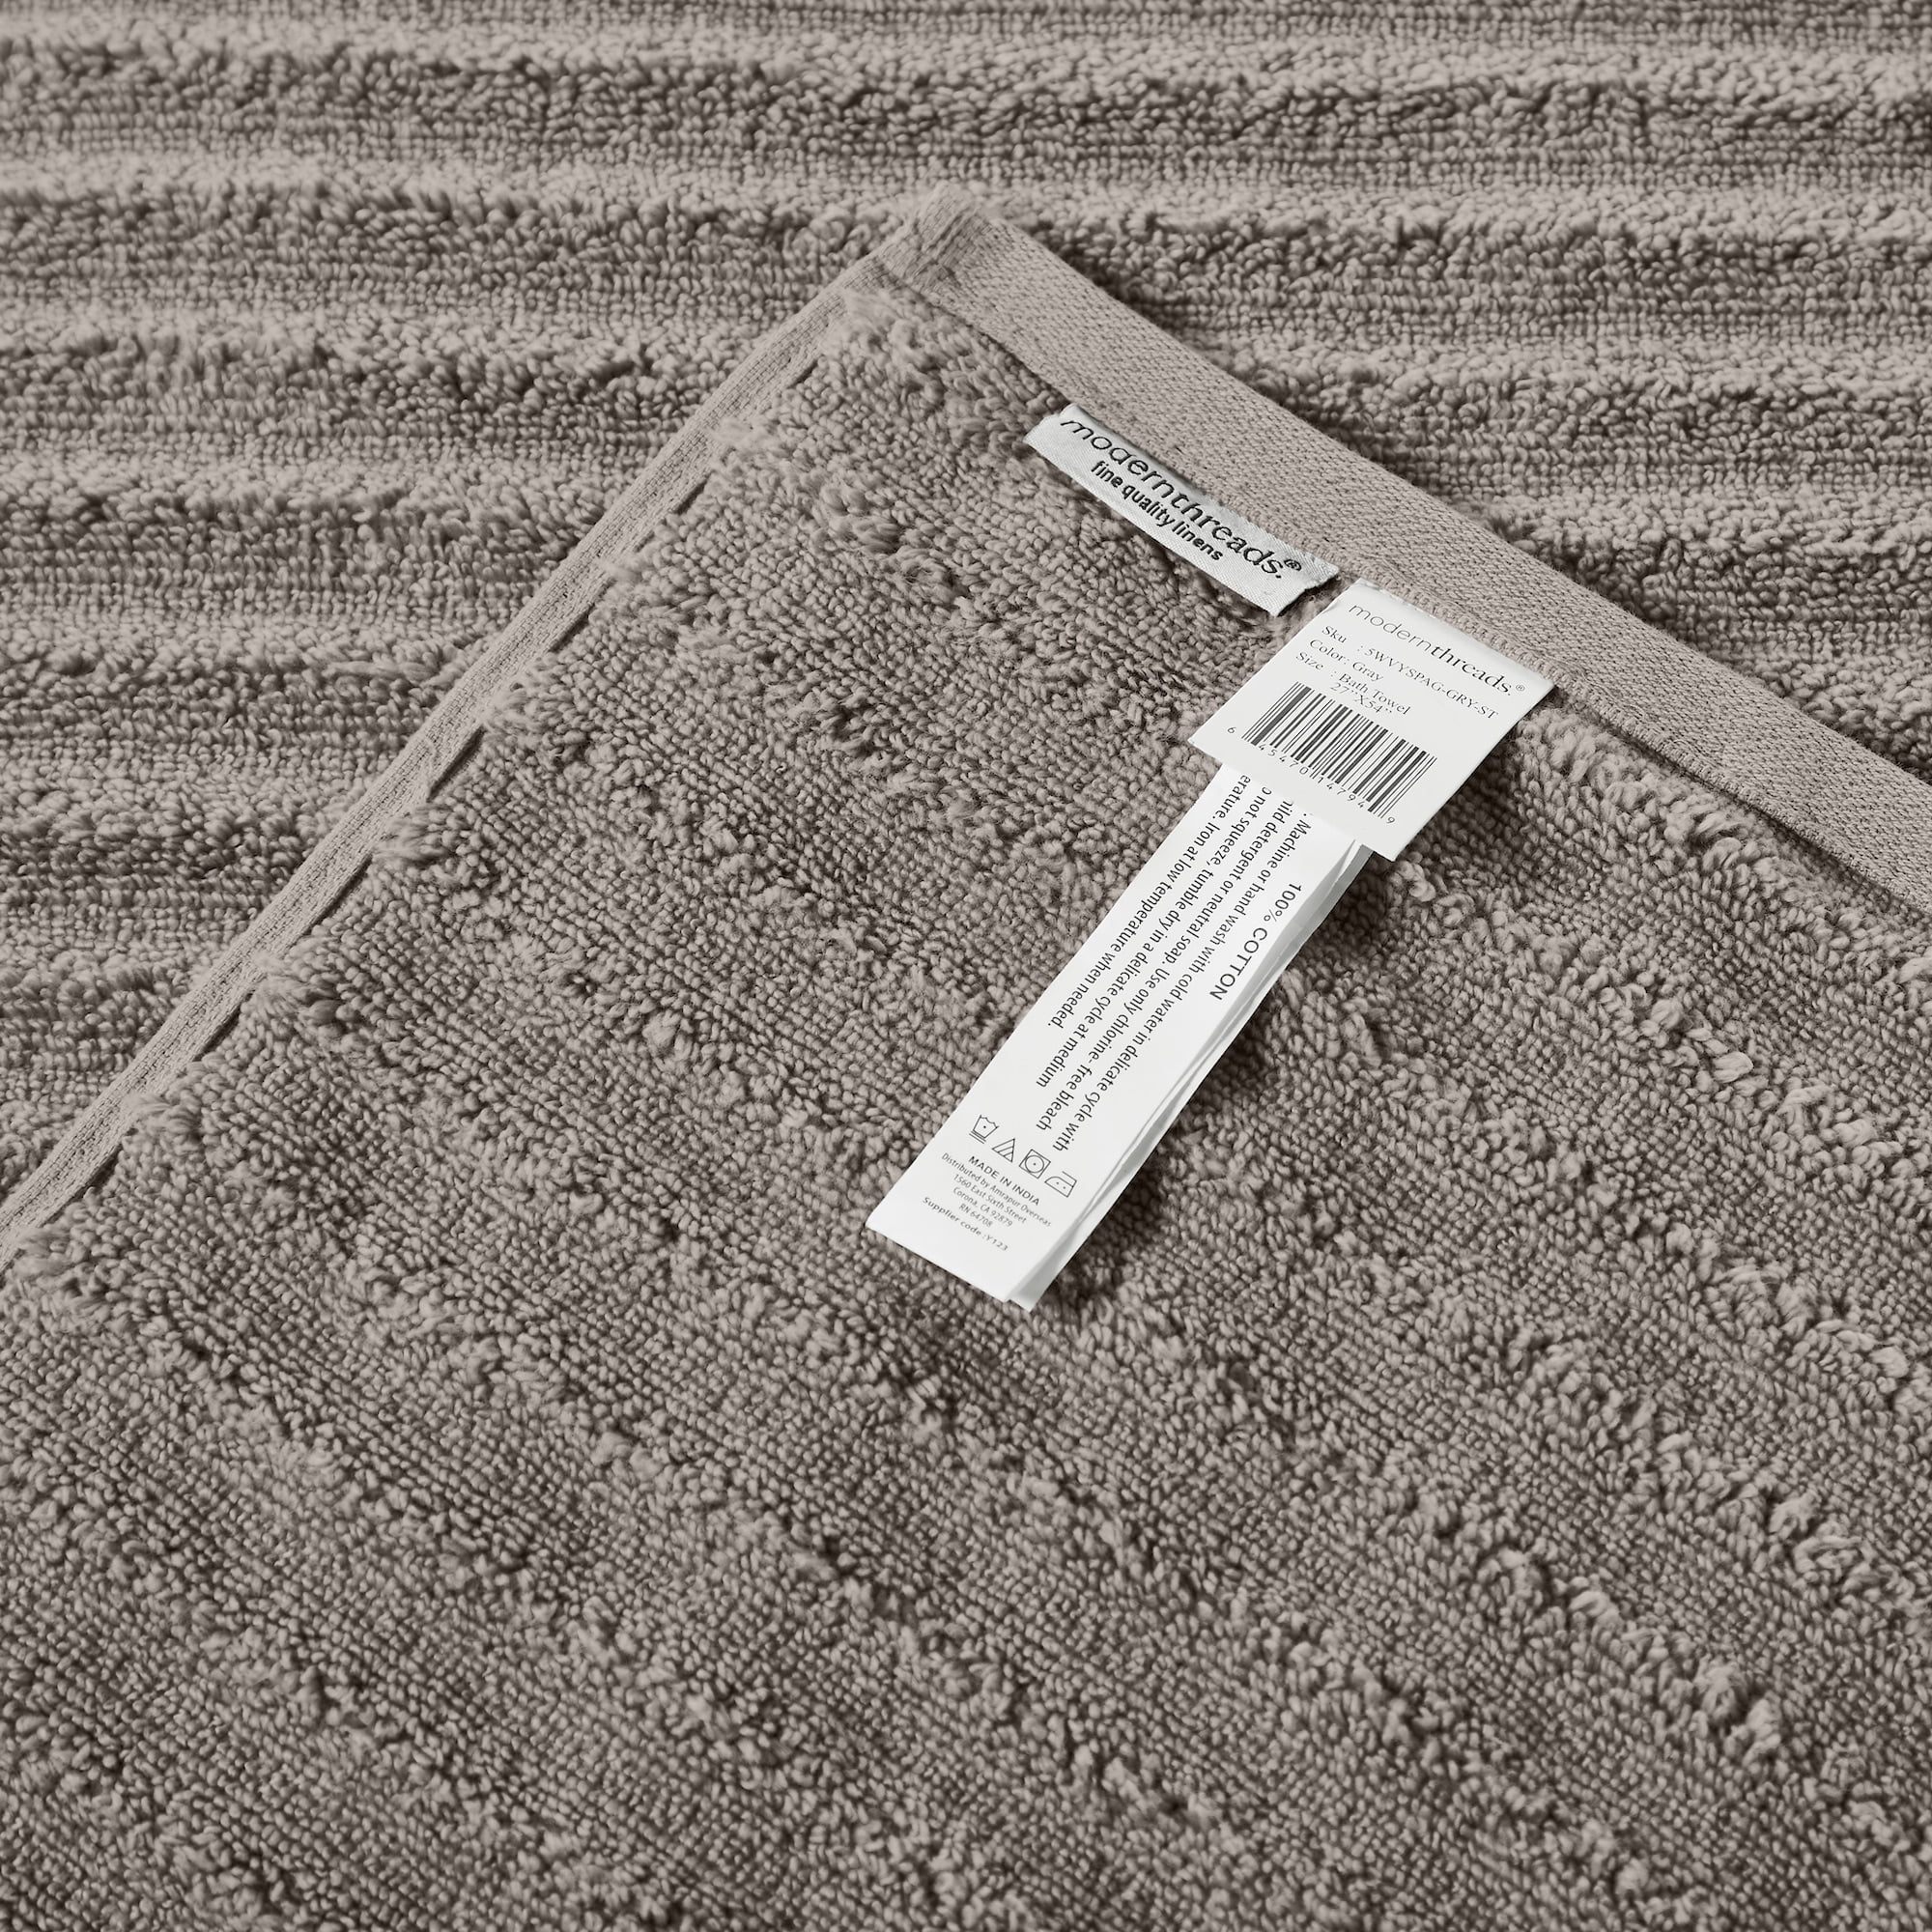 nestwell bath towel solid gray 100% cotton classic modern